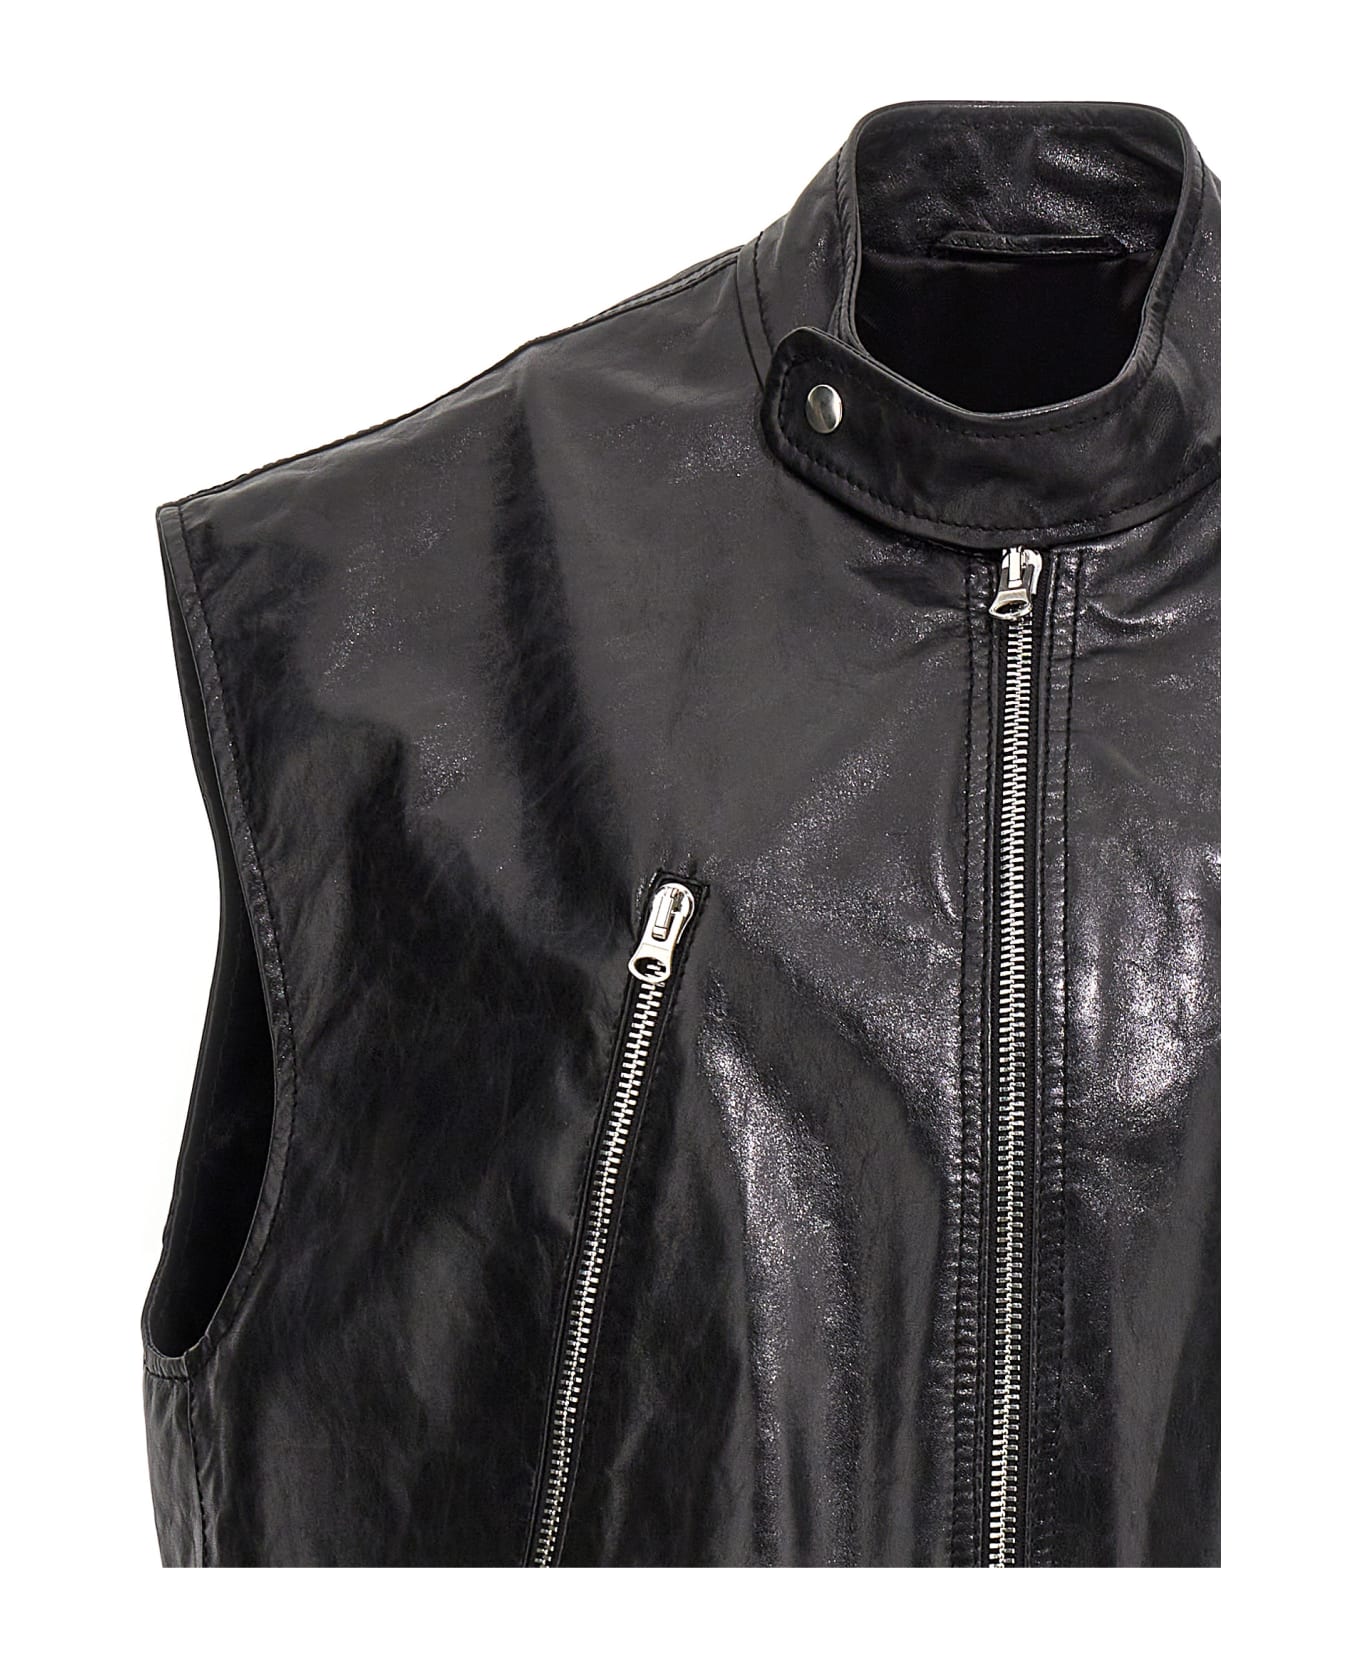 MM6 Maison Margiela Oversize Leather Vest - Black  